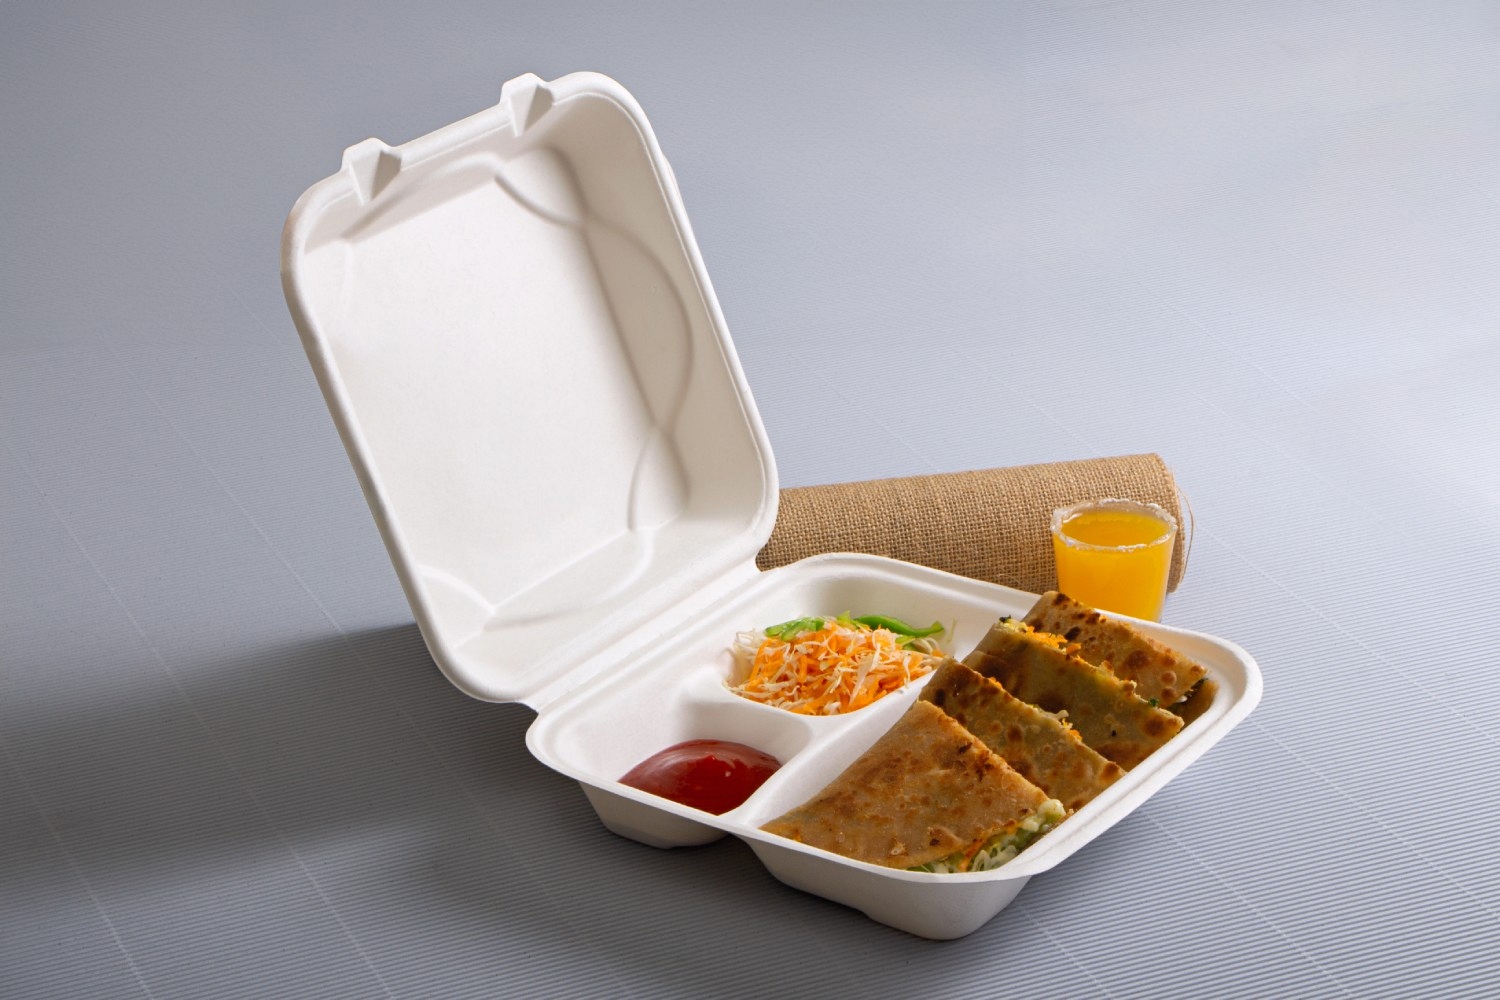 Boîte Repas avec Compartiments Bagasse - Ecogreen Packaging